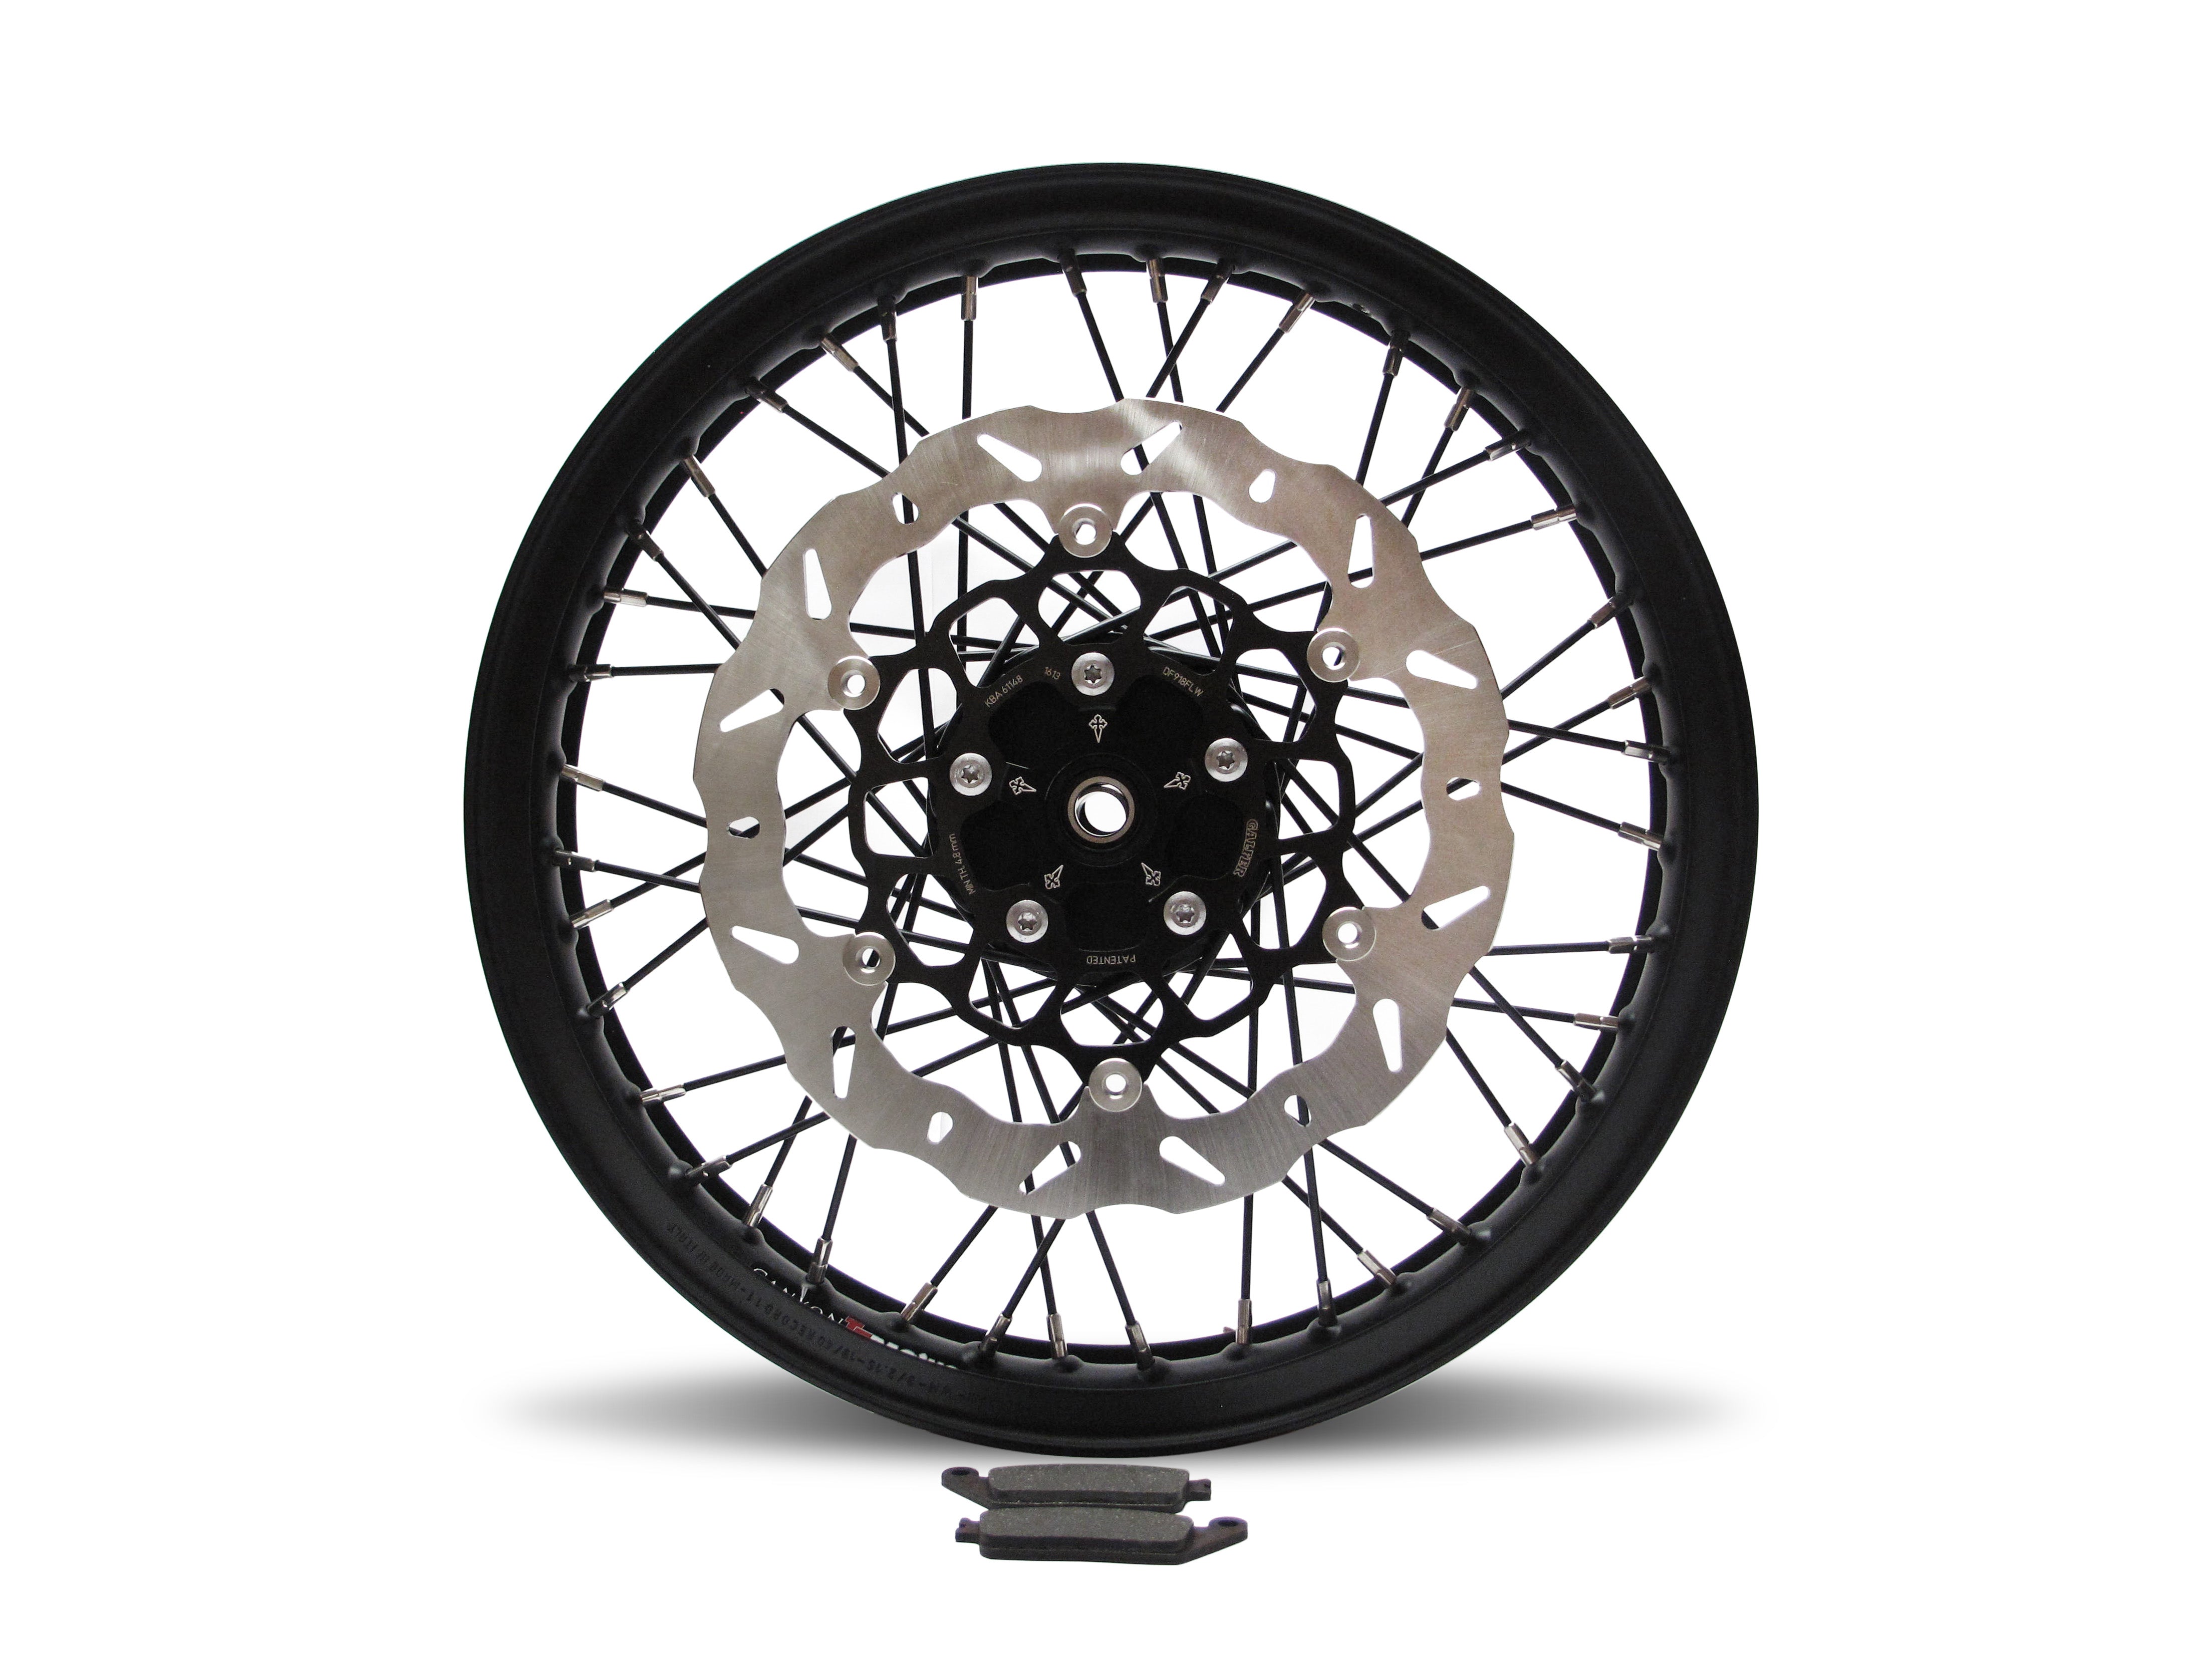 40 Spoke Alloy Flat Tracker Wheel Kit - Stage 1 - Any Size, Any Custom Finish! Deposit.